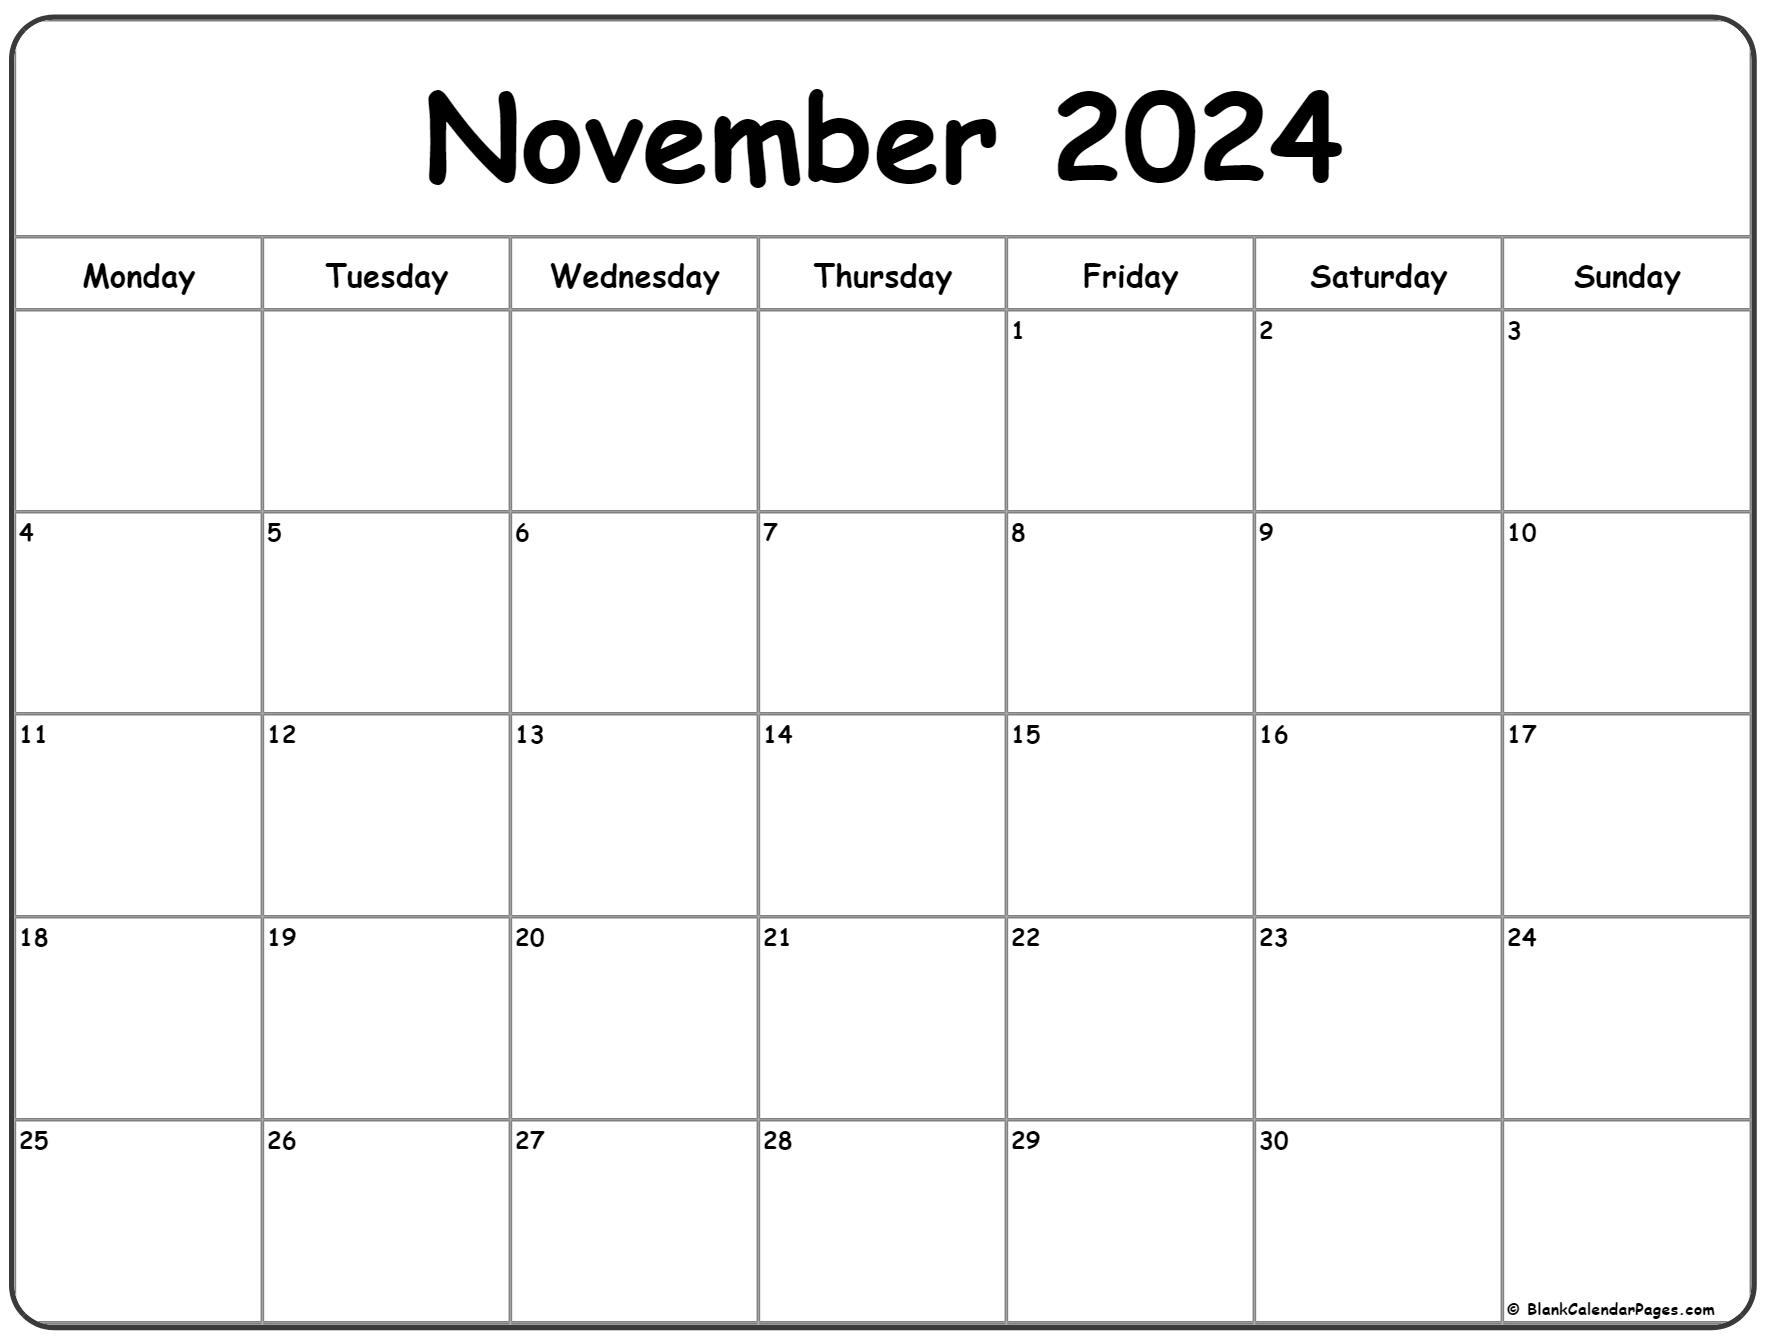 November 2022 Monday Calendar Monday to Sunday